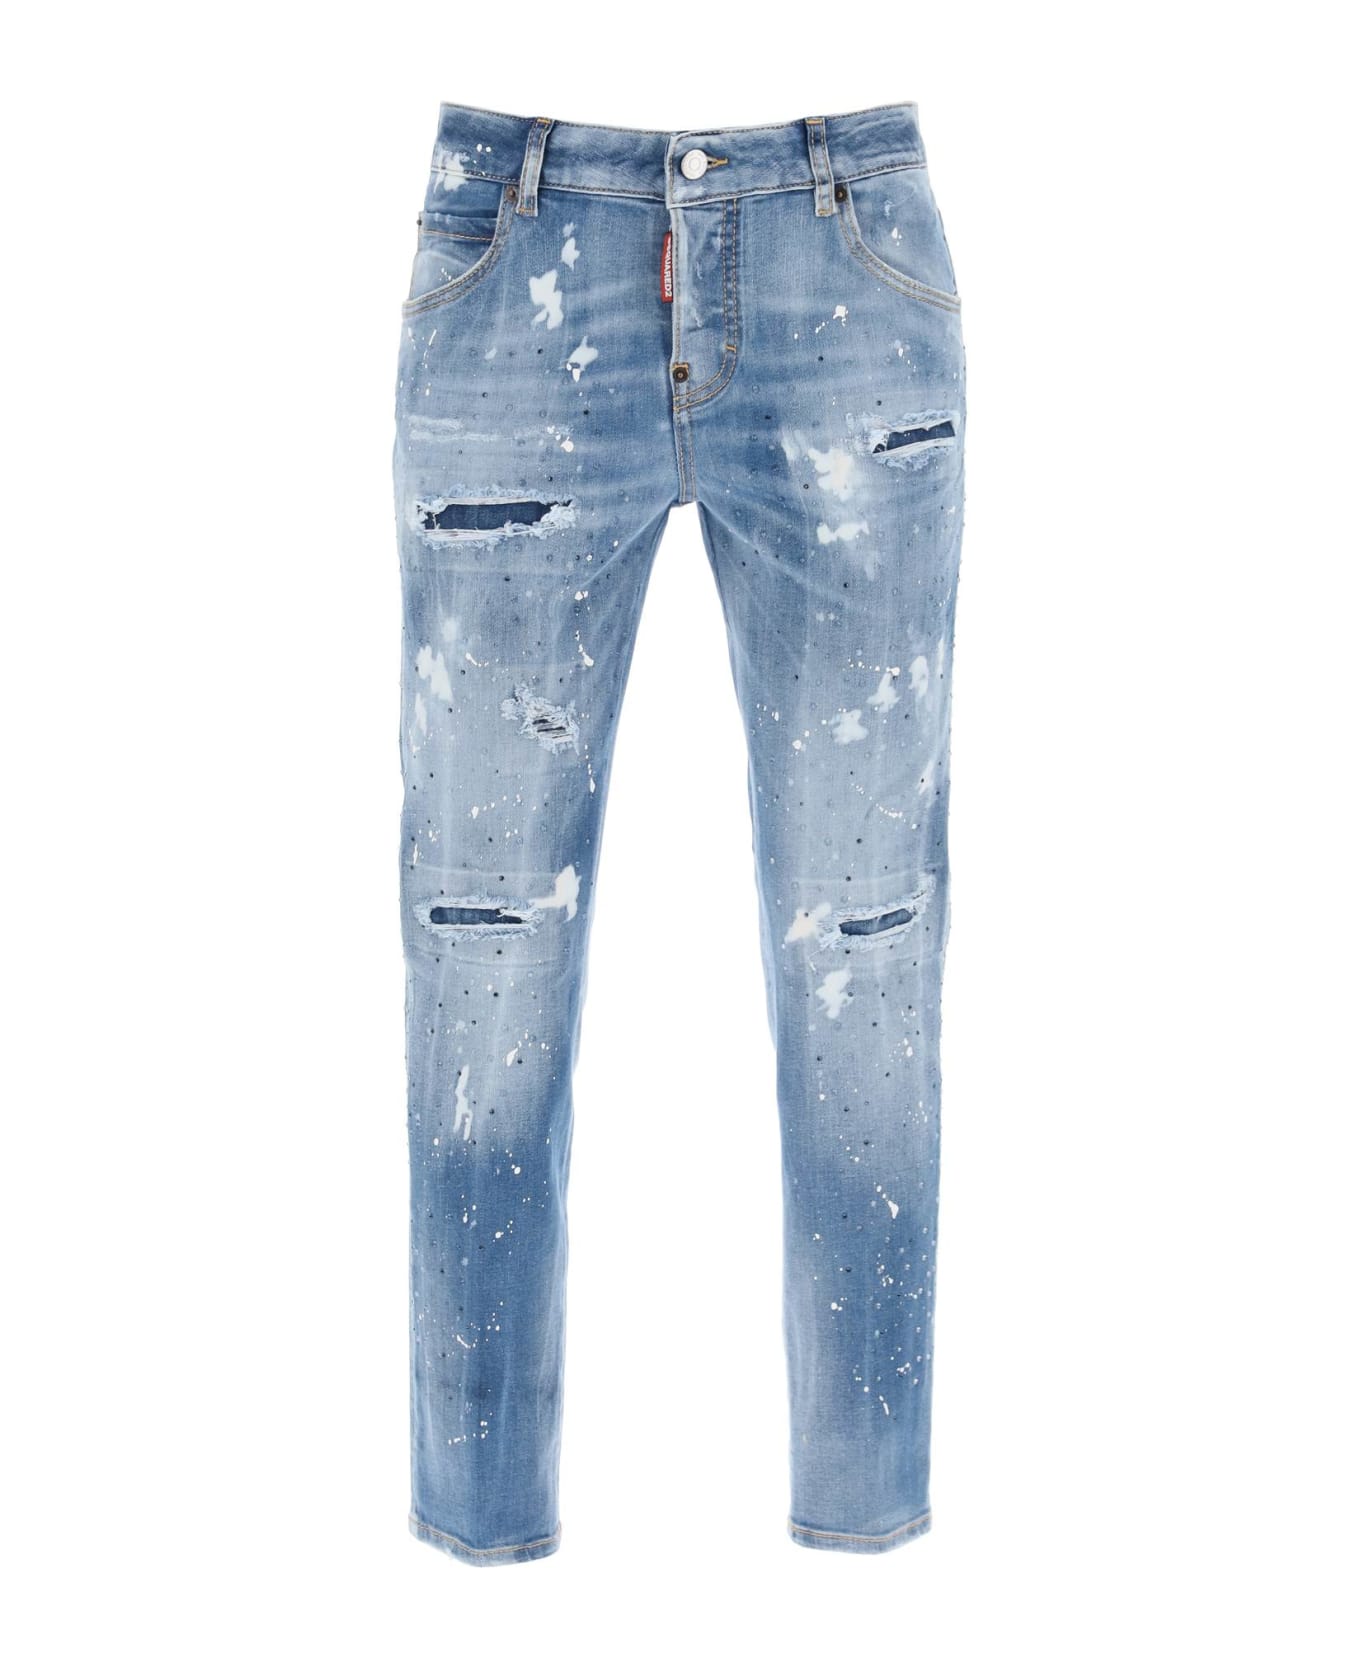 Dsquared2 Cool Girl Jeans - NAVY BLUE (Light blue)